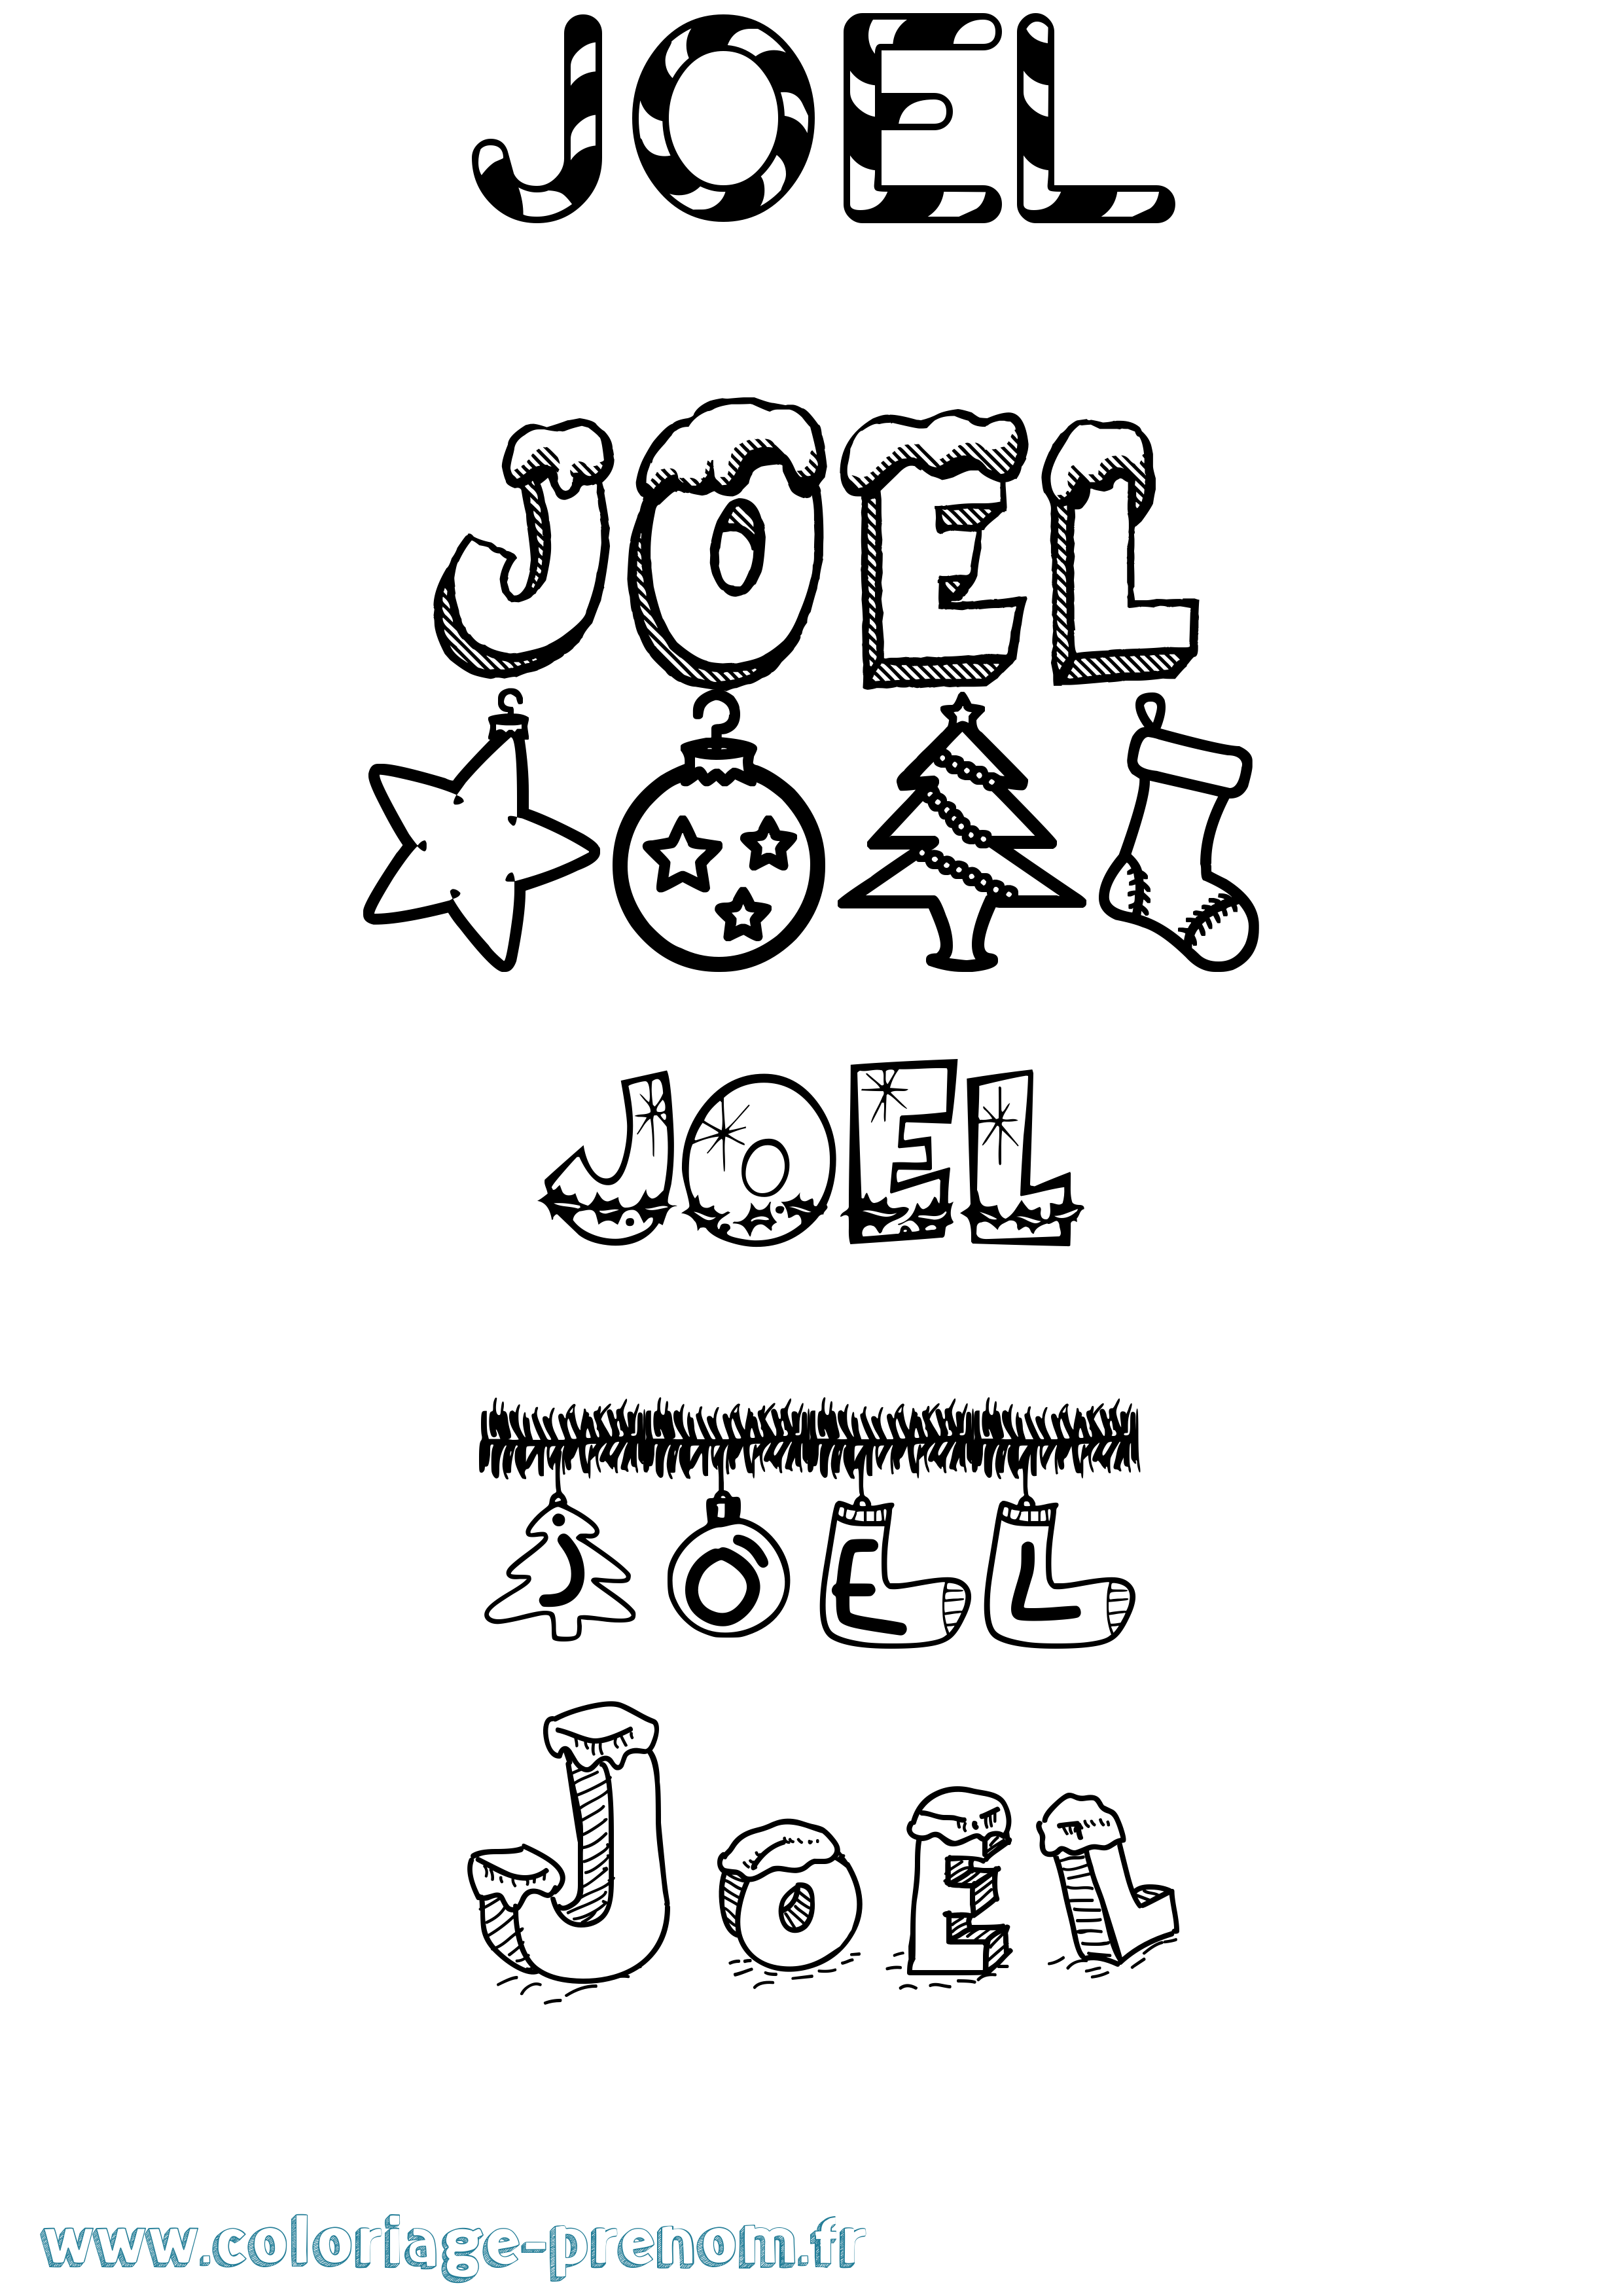 Coloriage prénom Joel